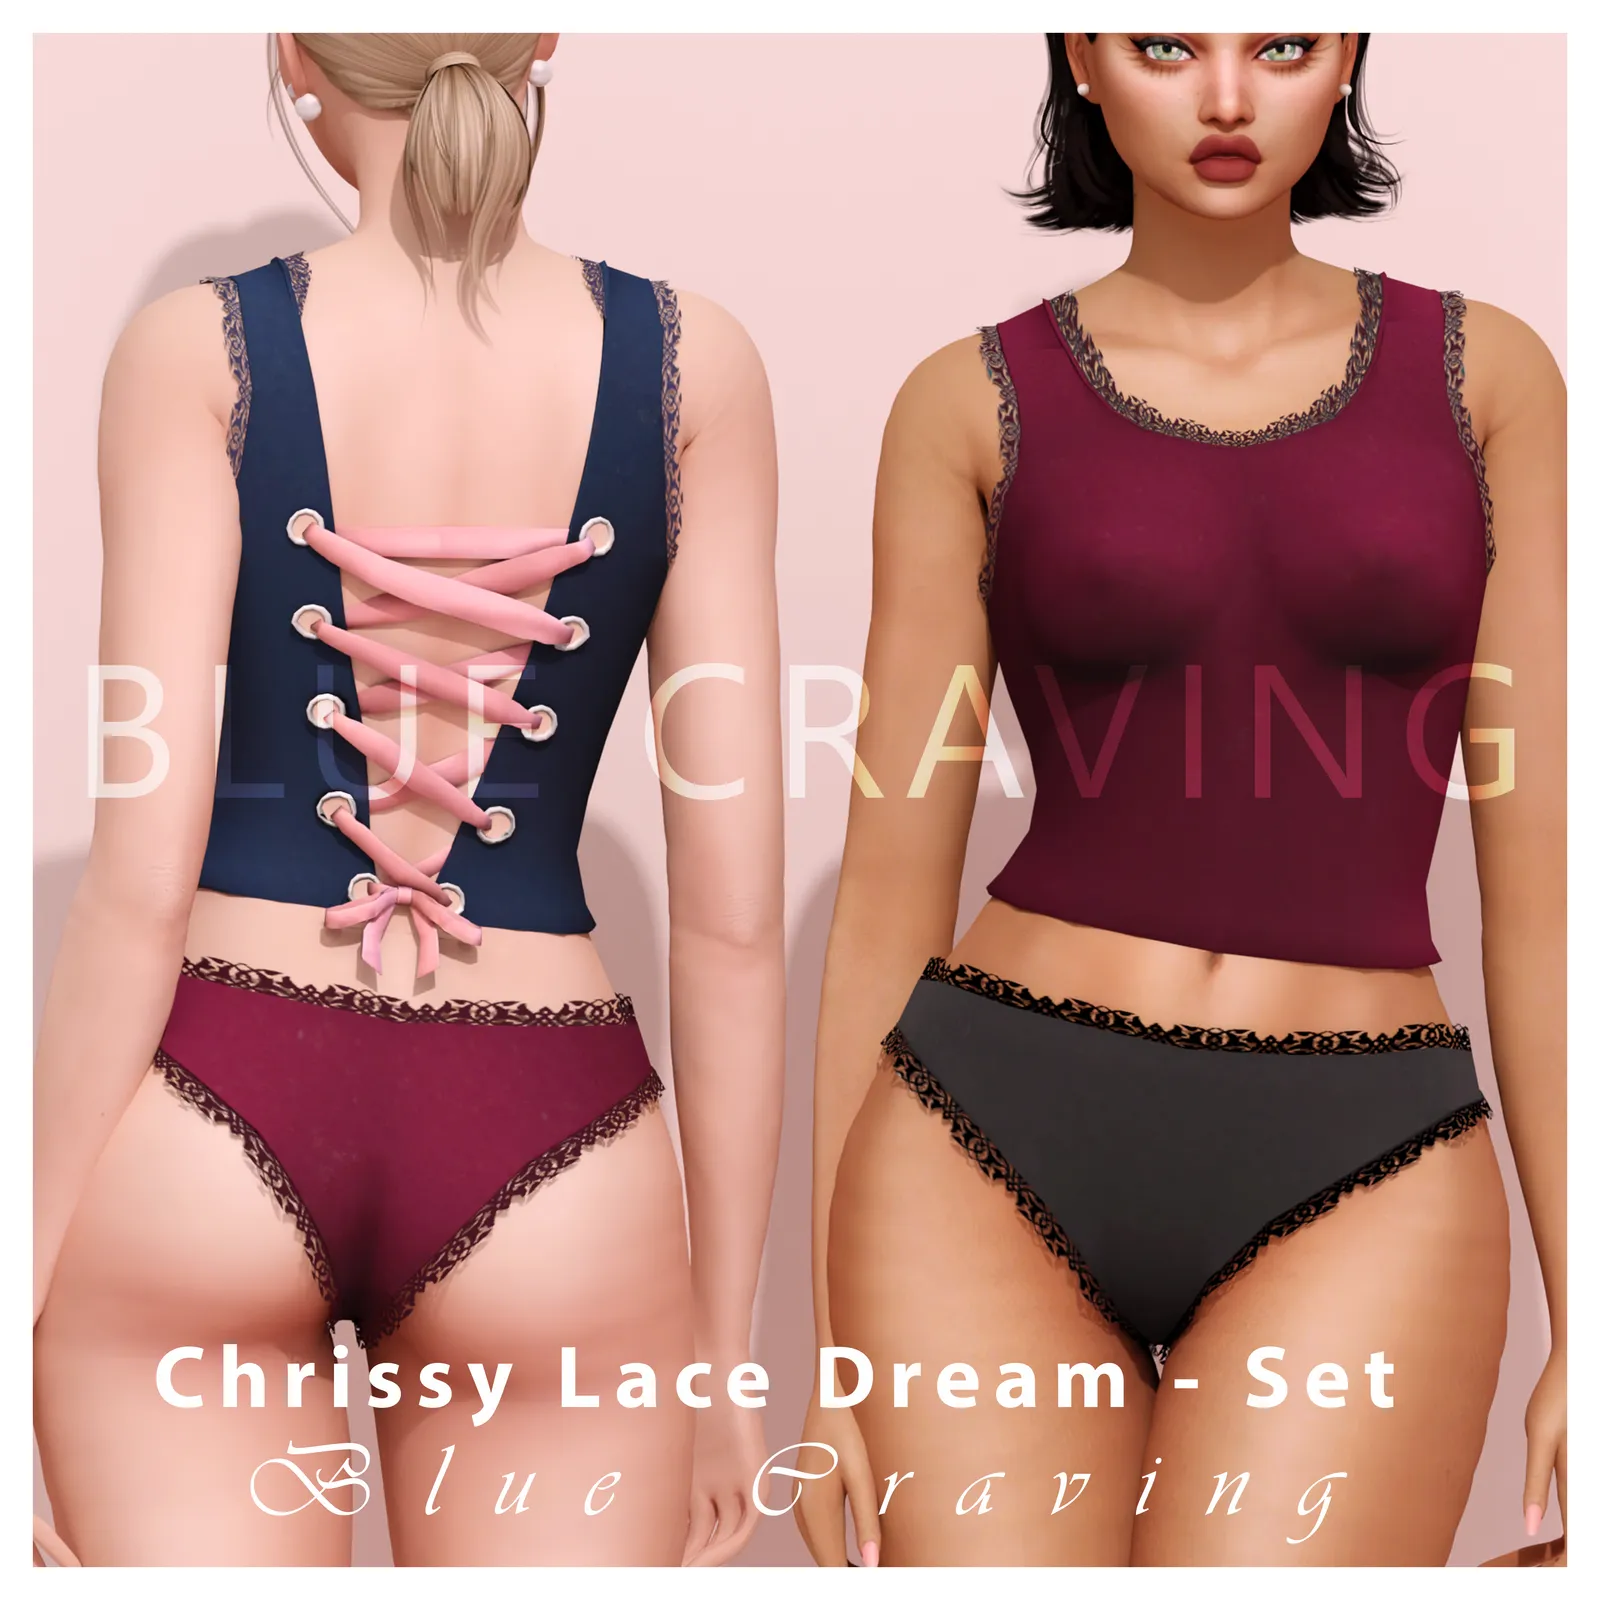 Chrissy Lace Dream Top & Panties